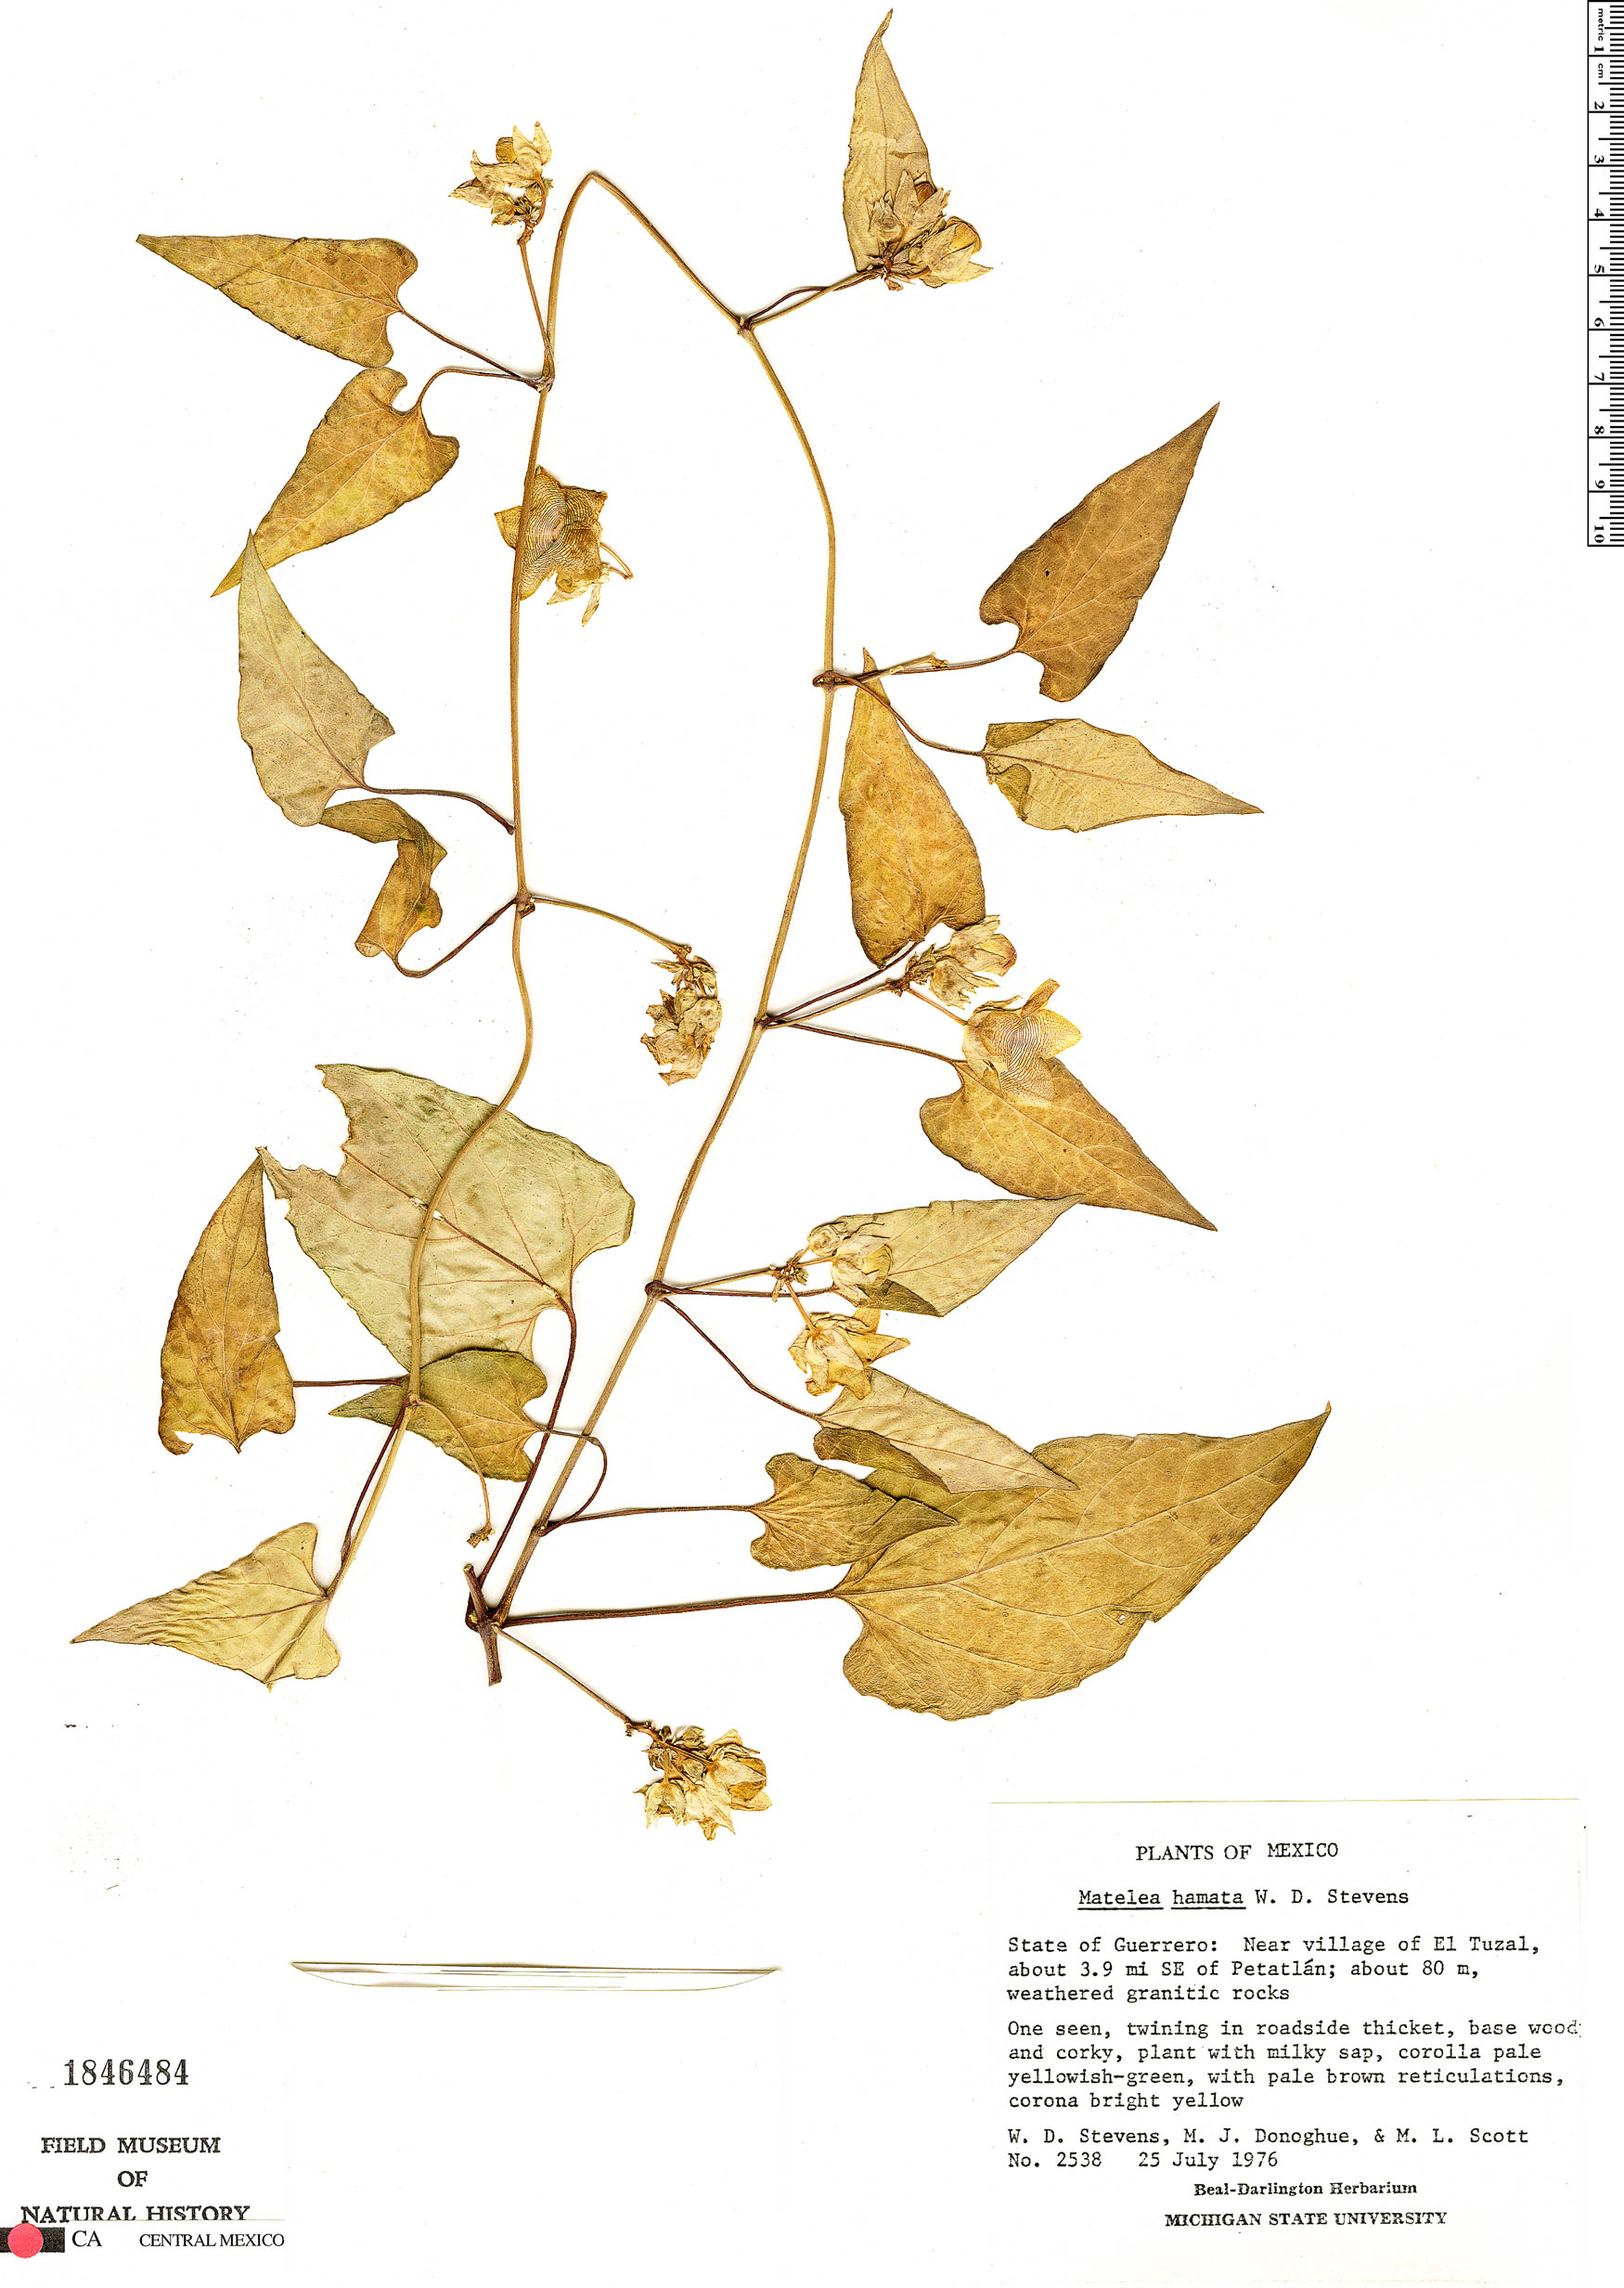 Dictyanthus hamatus image